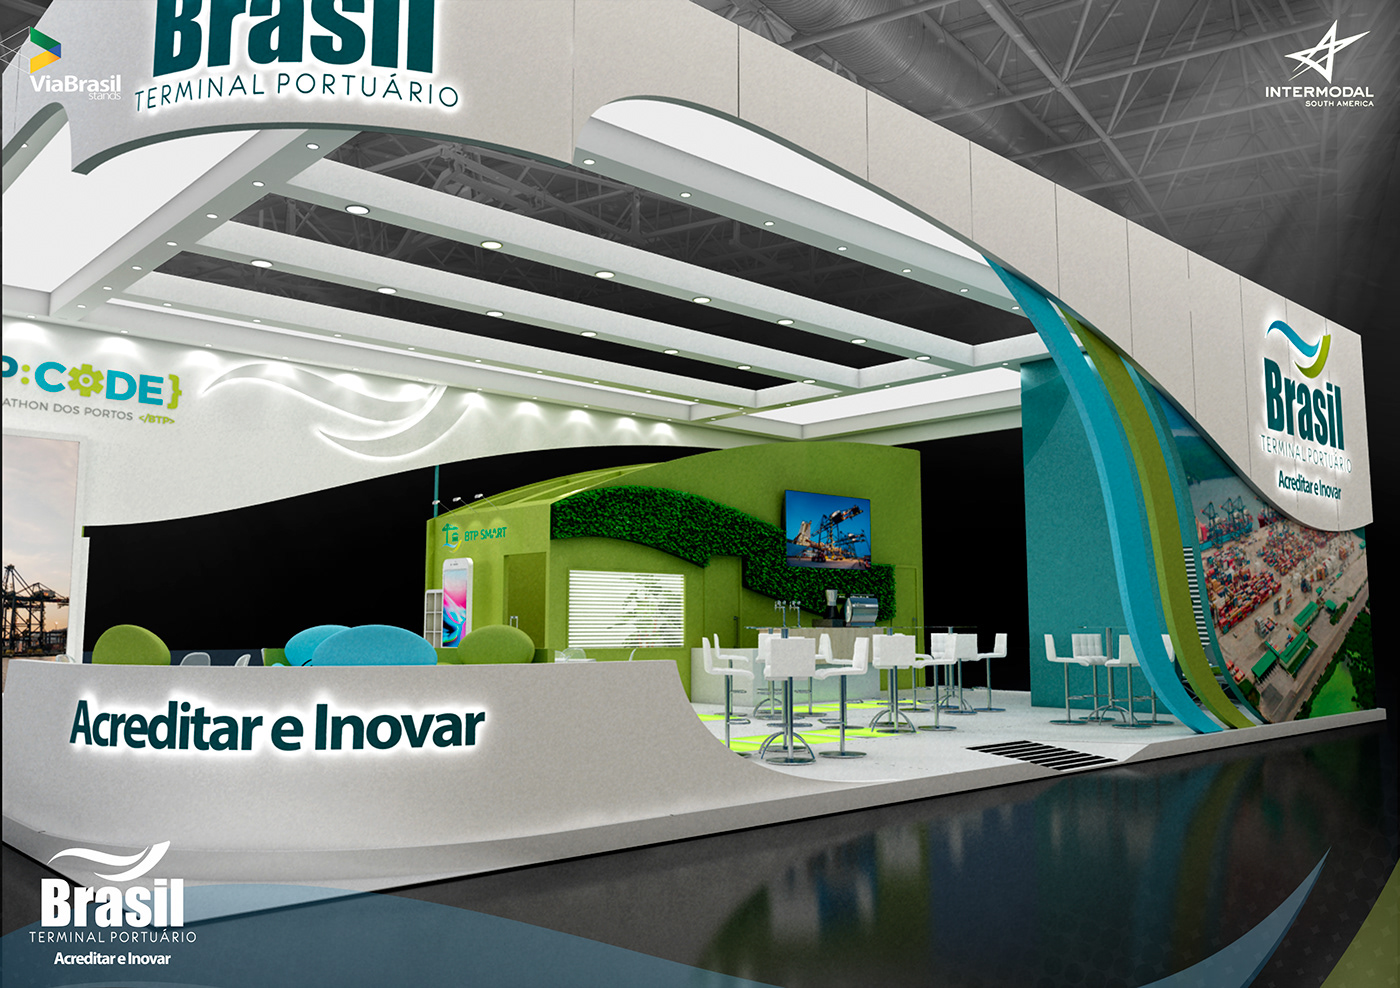 btp intermodal brasil terminal portuário Stand estande booth Exhibition Stand Design exhibition booth design